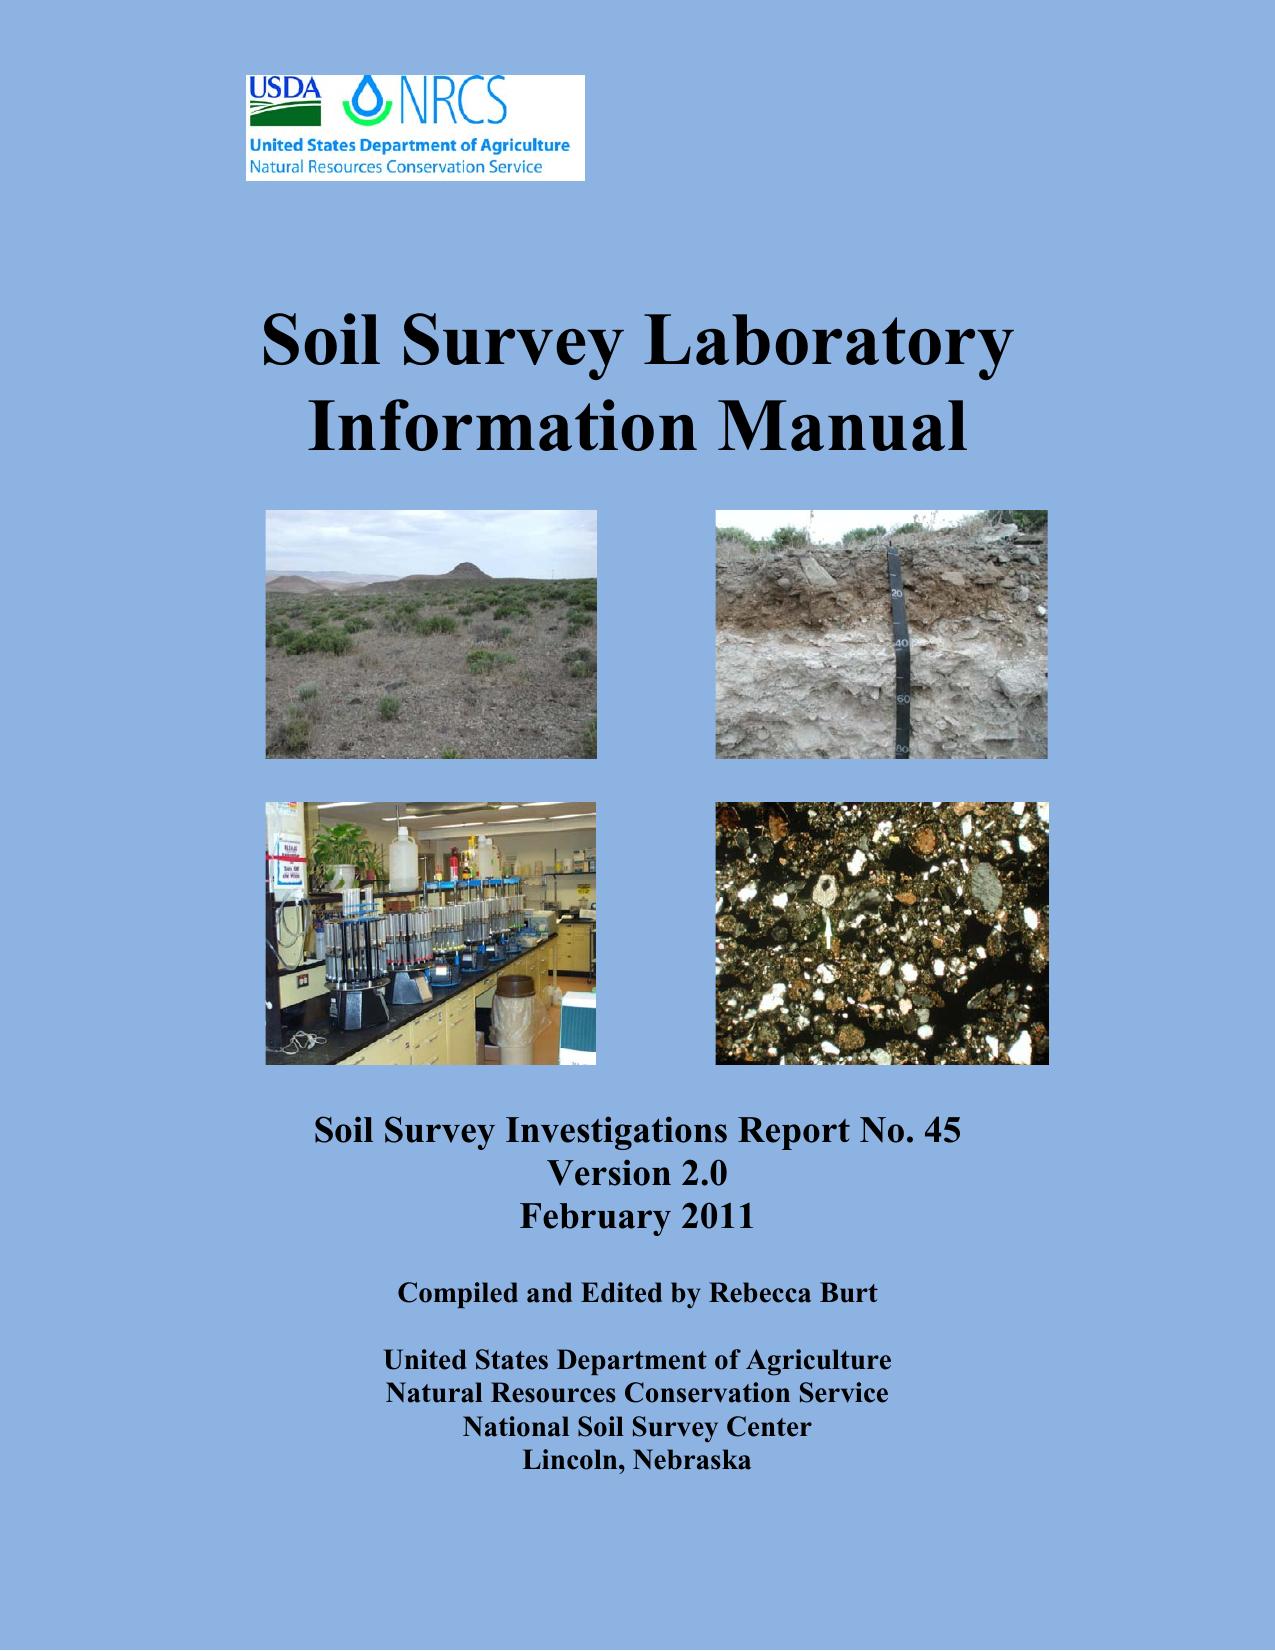 Soil Survey Laboratory Information Manual, Version 2.0 (SSIR No. 45)